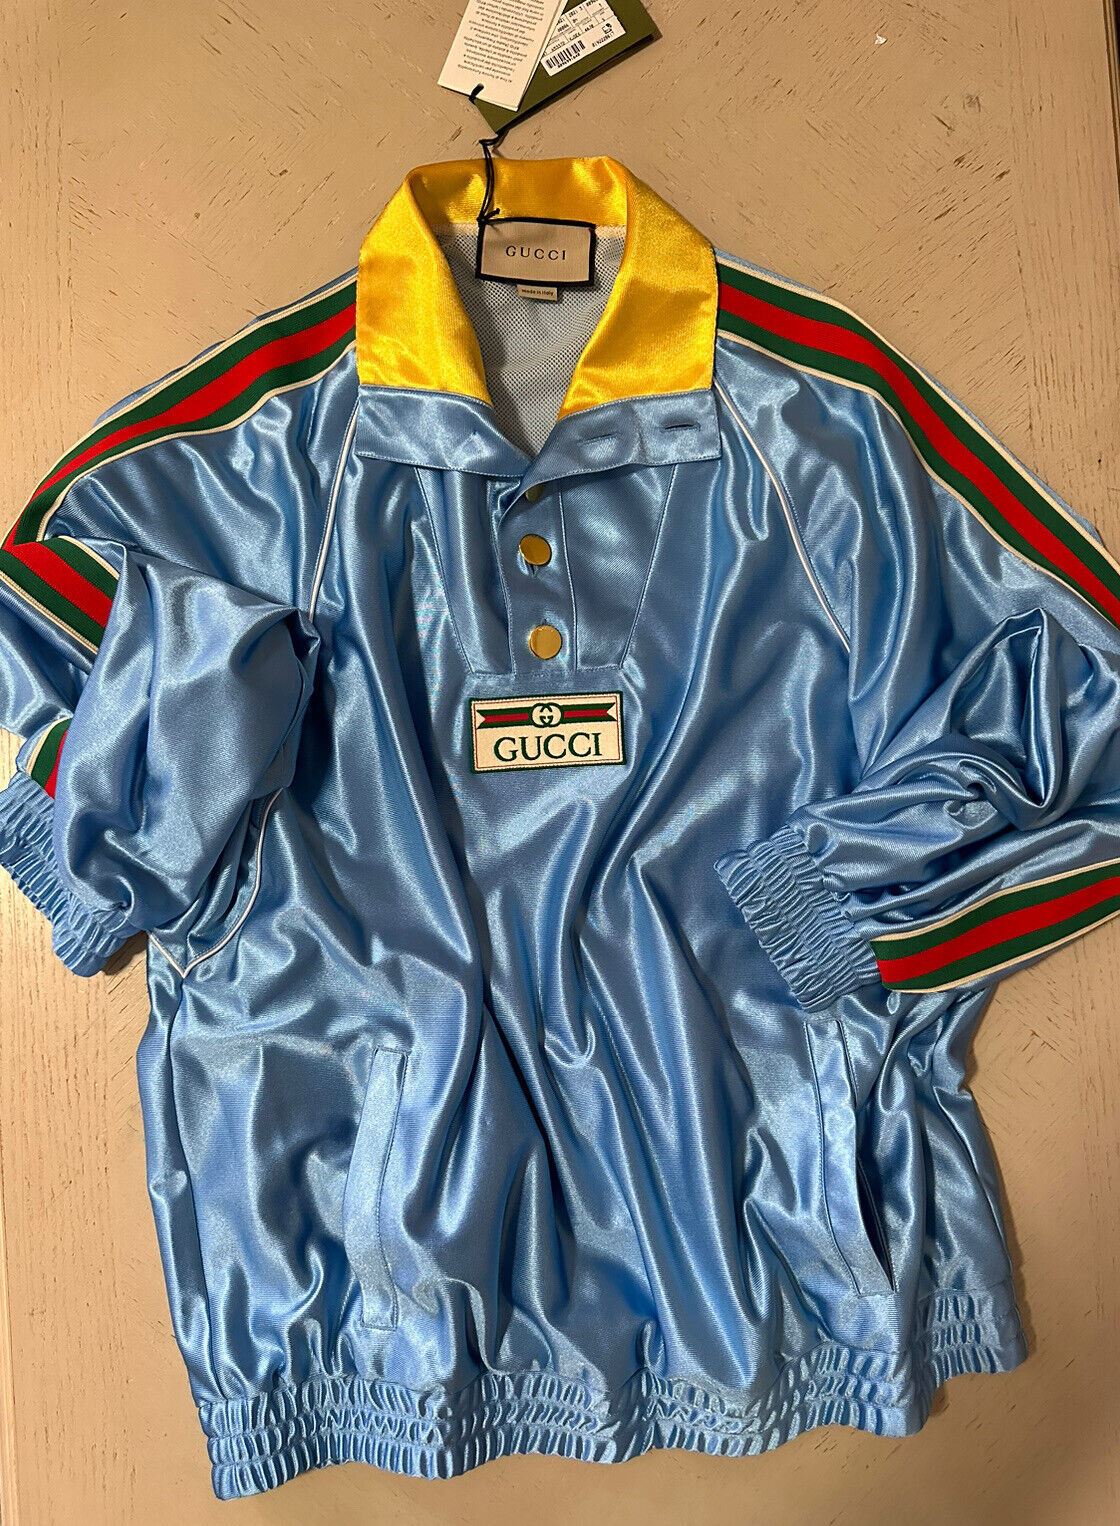 Мужская оверсайз-спортивная куртка из технического полиэстера NWT $1650 Gucci ярко-синяя S